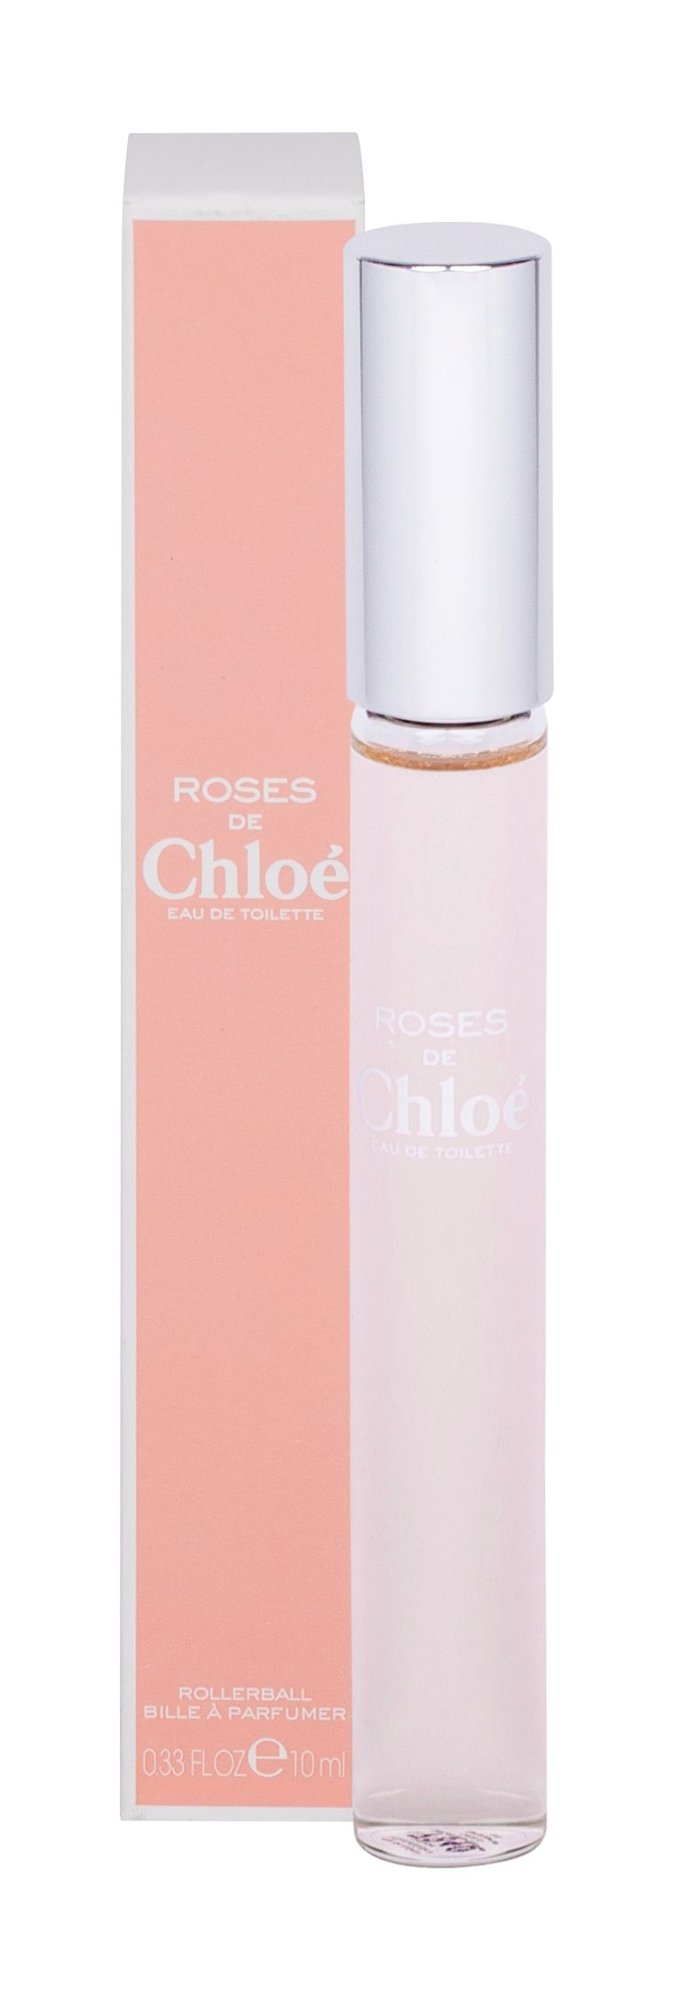 Chloé Roses De Chloe, Toaletná voda 10ml, Rollerball